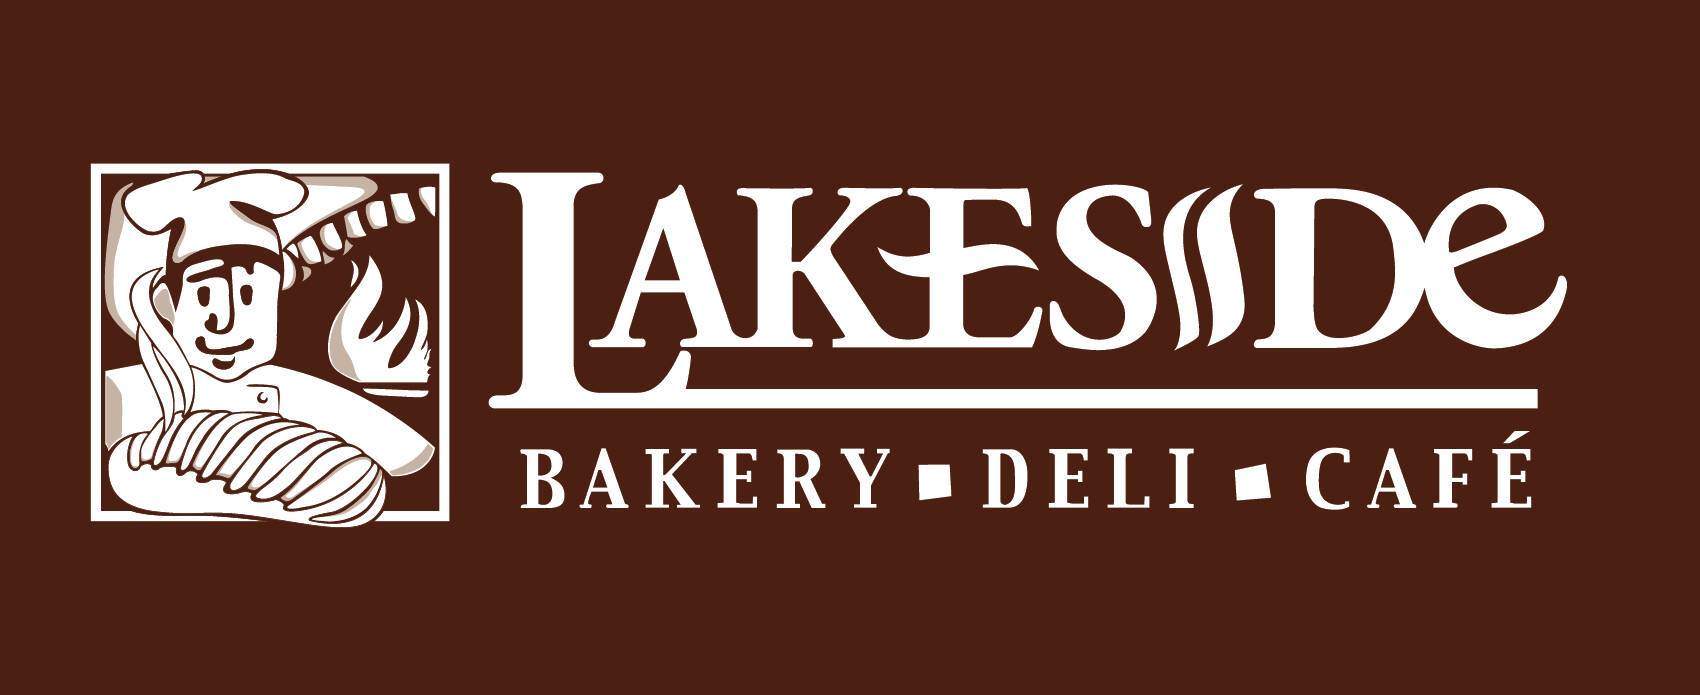 Lakeside Bakery-Deli-Cafe